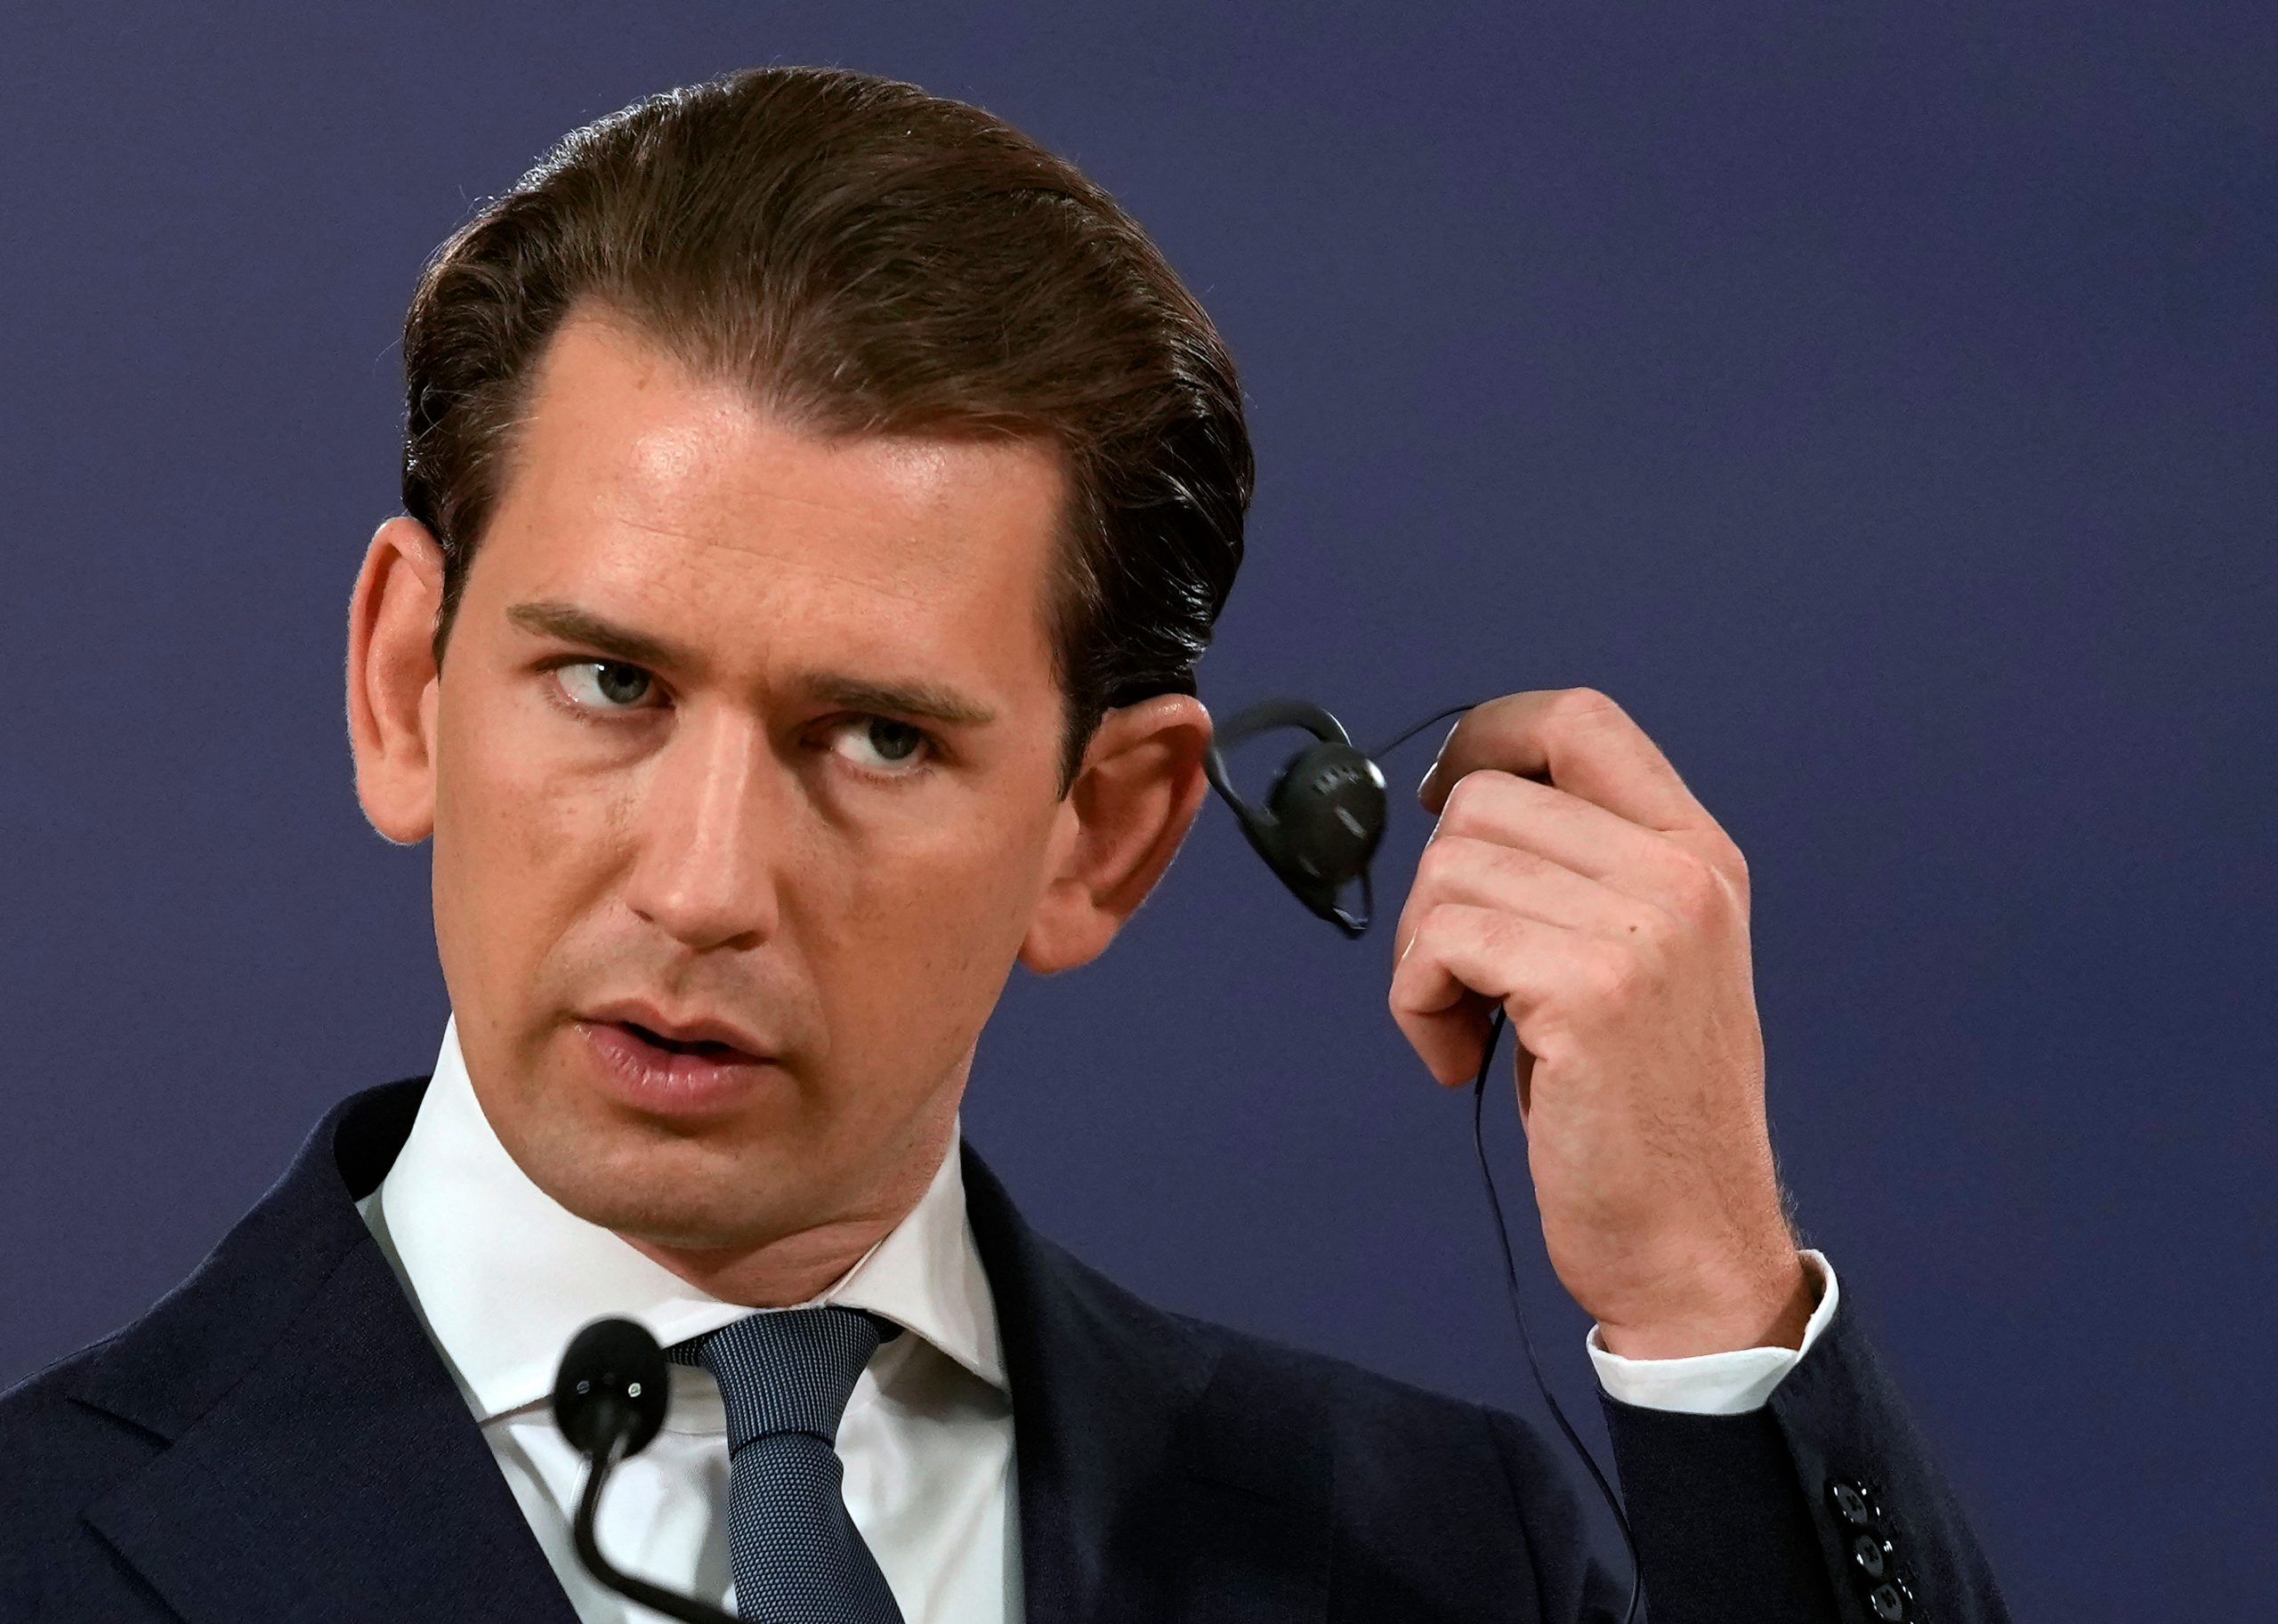 Sebastian Kurz resigns as Austrian Chancellor amid corruption investigation